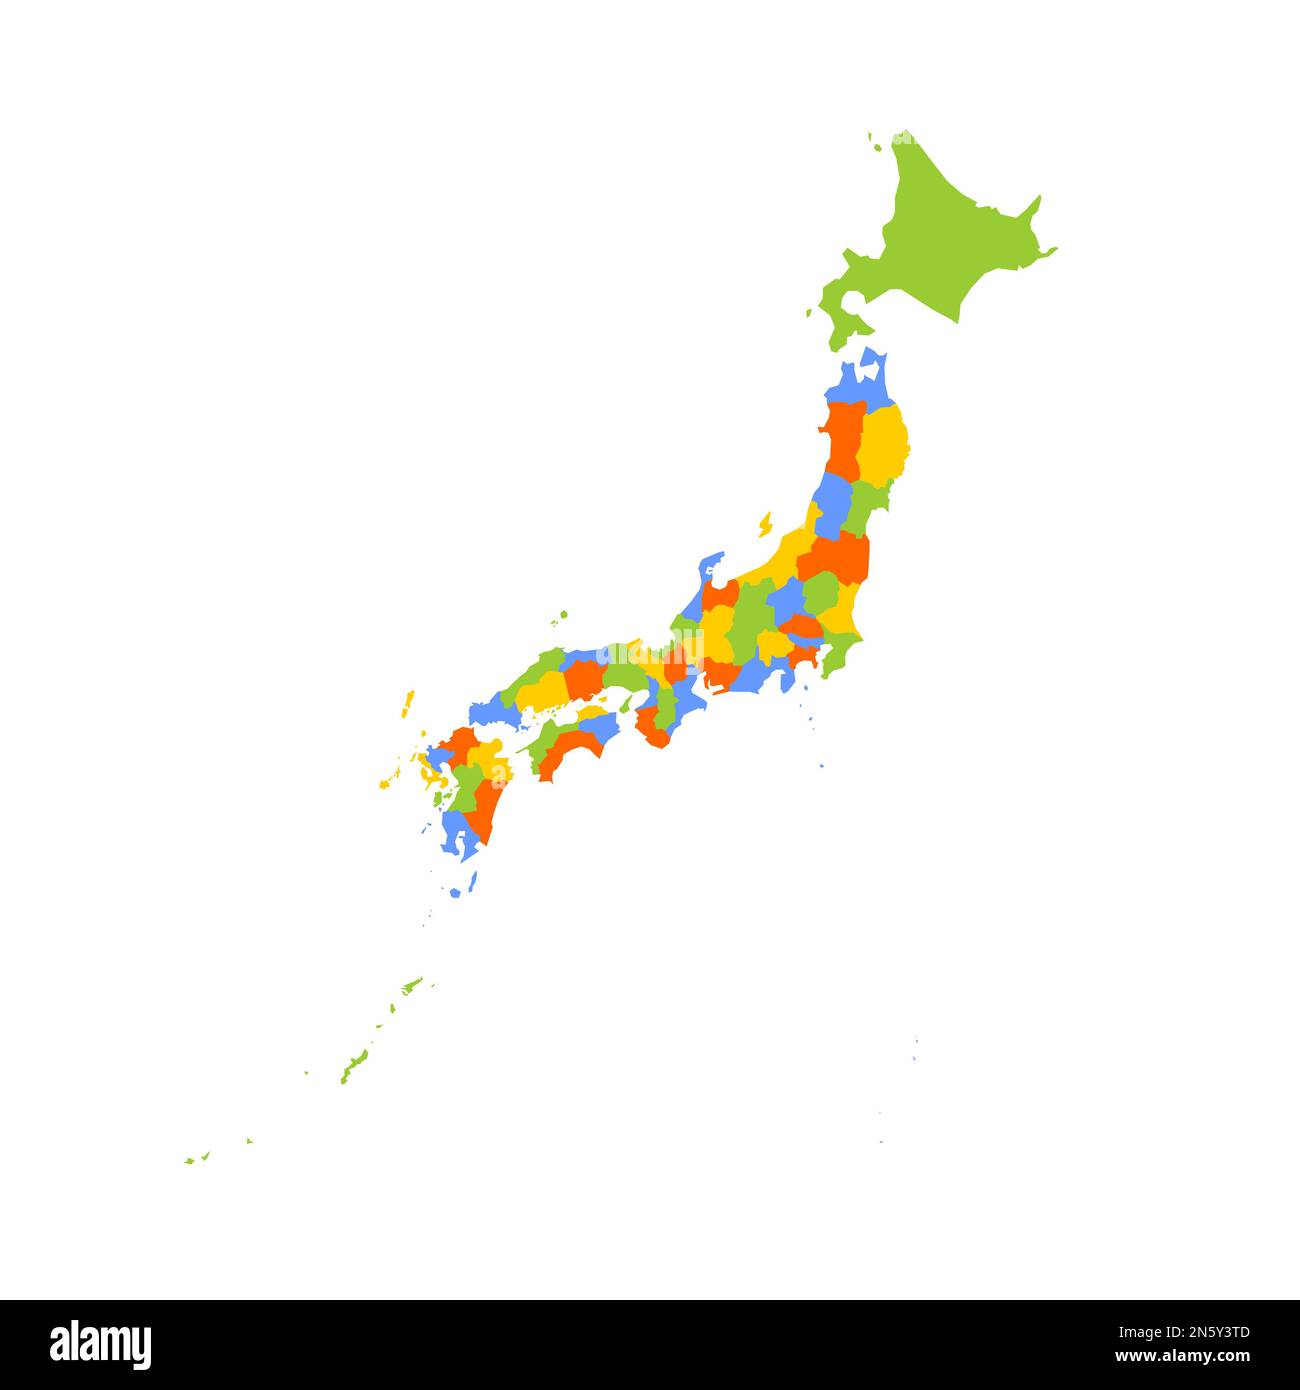 Politische Karte der Verwaltungseinheiten Japans - Präfekturen, Metropilis Tokio, Territorium Hokaido und städtische Präfekturen Kyoto und Osaka. Leere farbige Vektorkarte. Stock Vektor